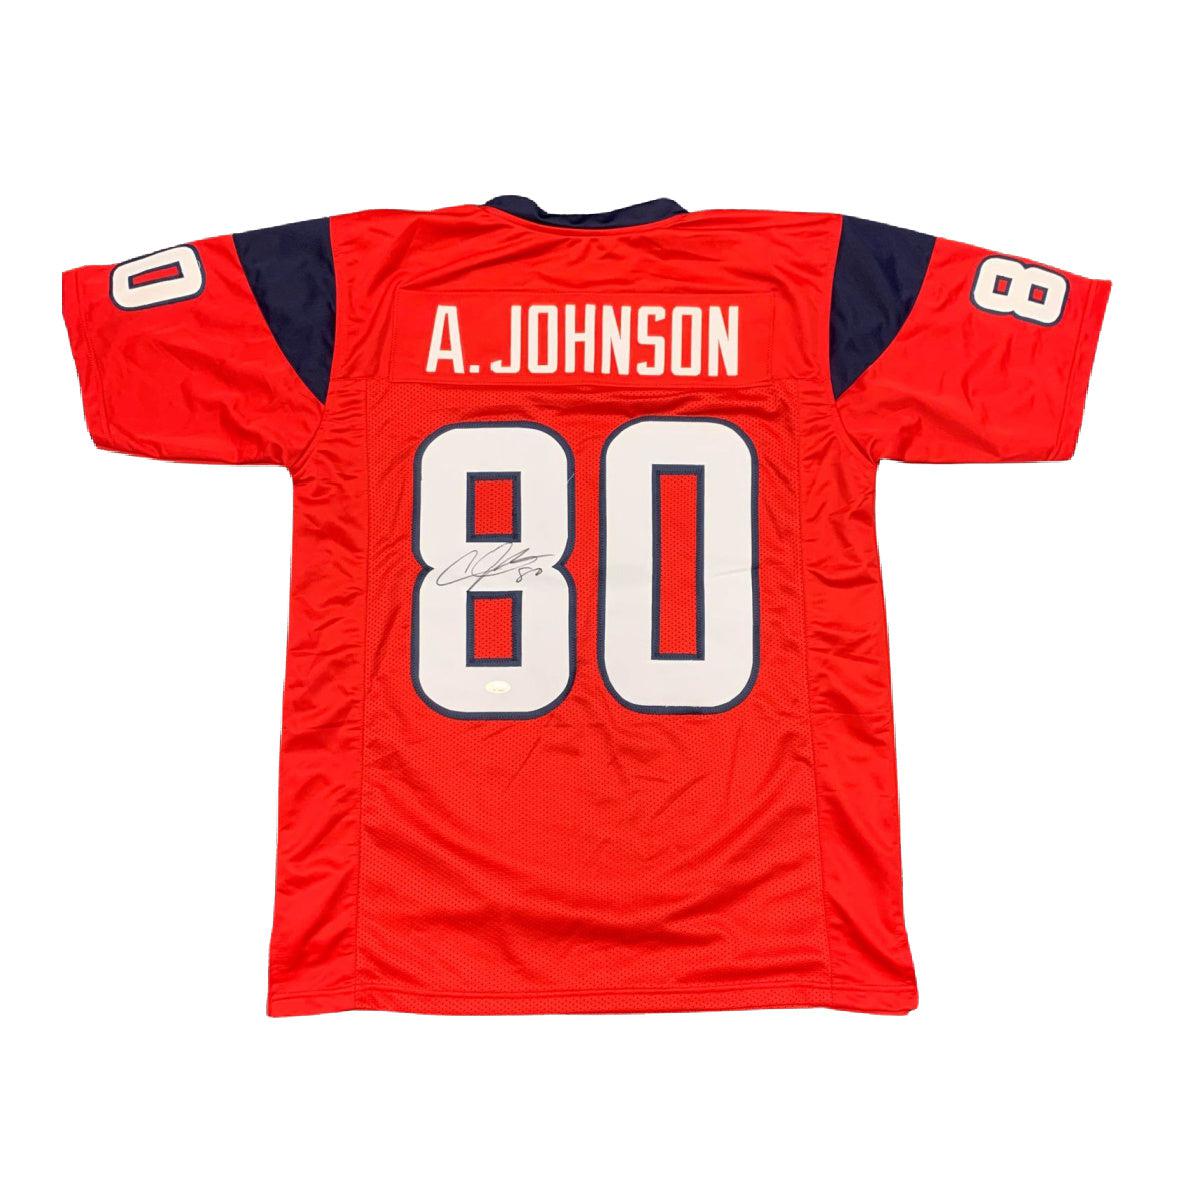 Andre Johnson Signed Custom Houston Texans Jersey Autographed JSA COA - Red